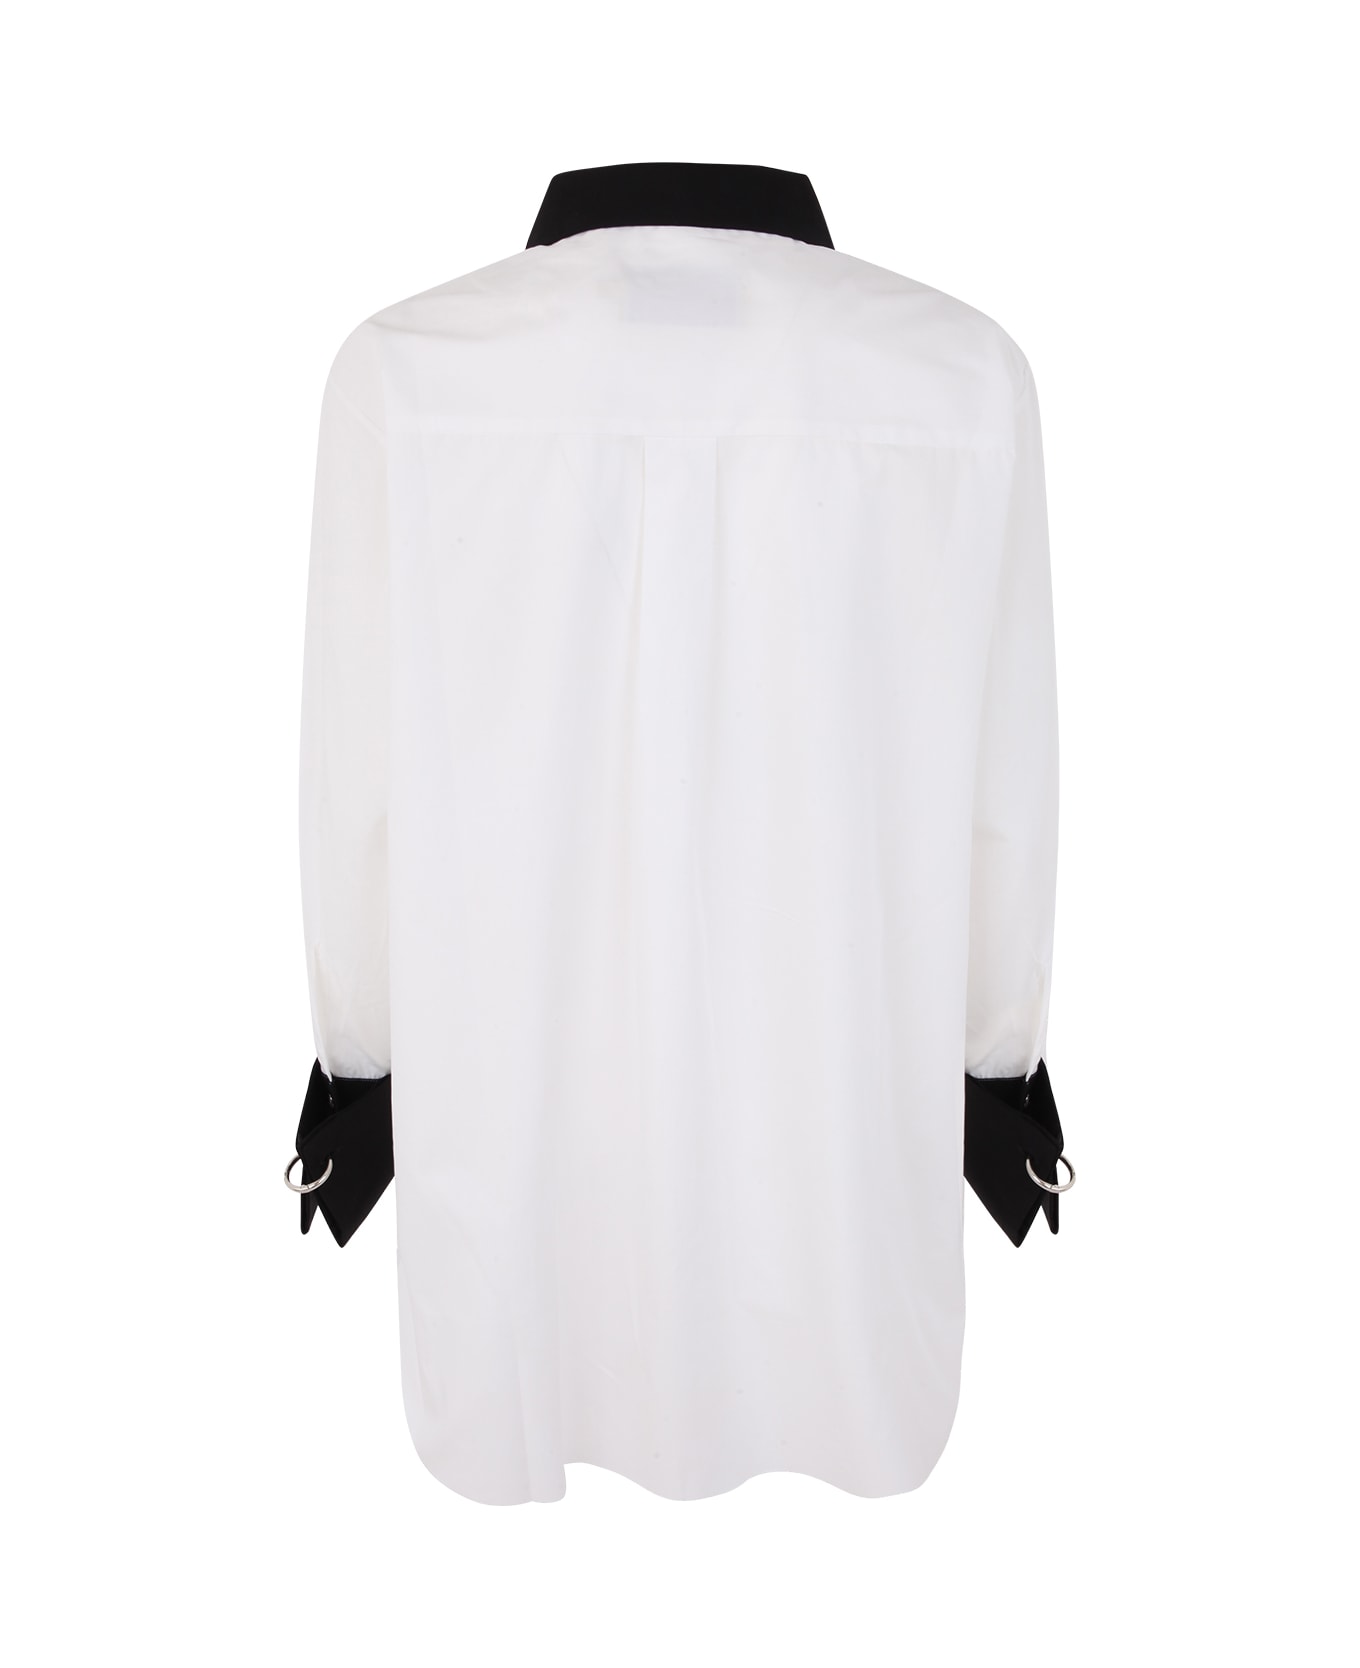 Marques'Almeida Shirt With Detachable Cuffs And Collar - Black/white シャツ